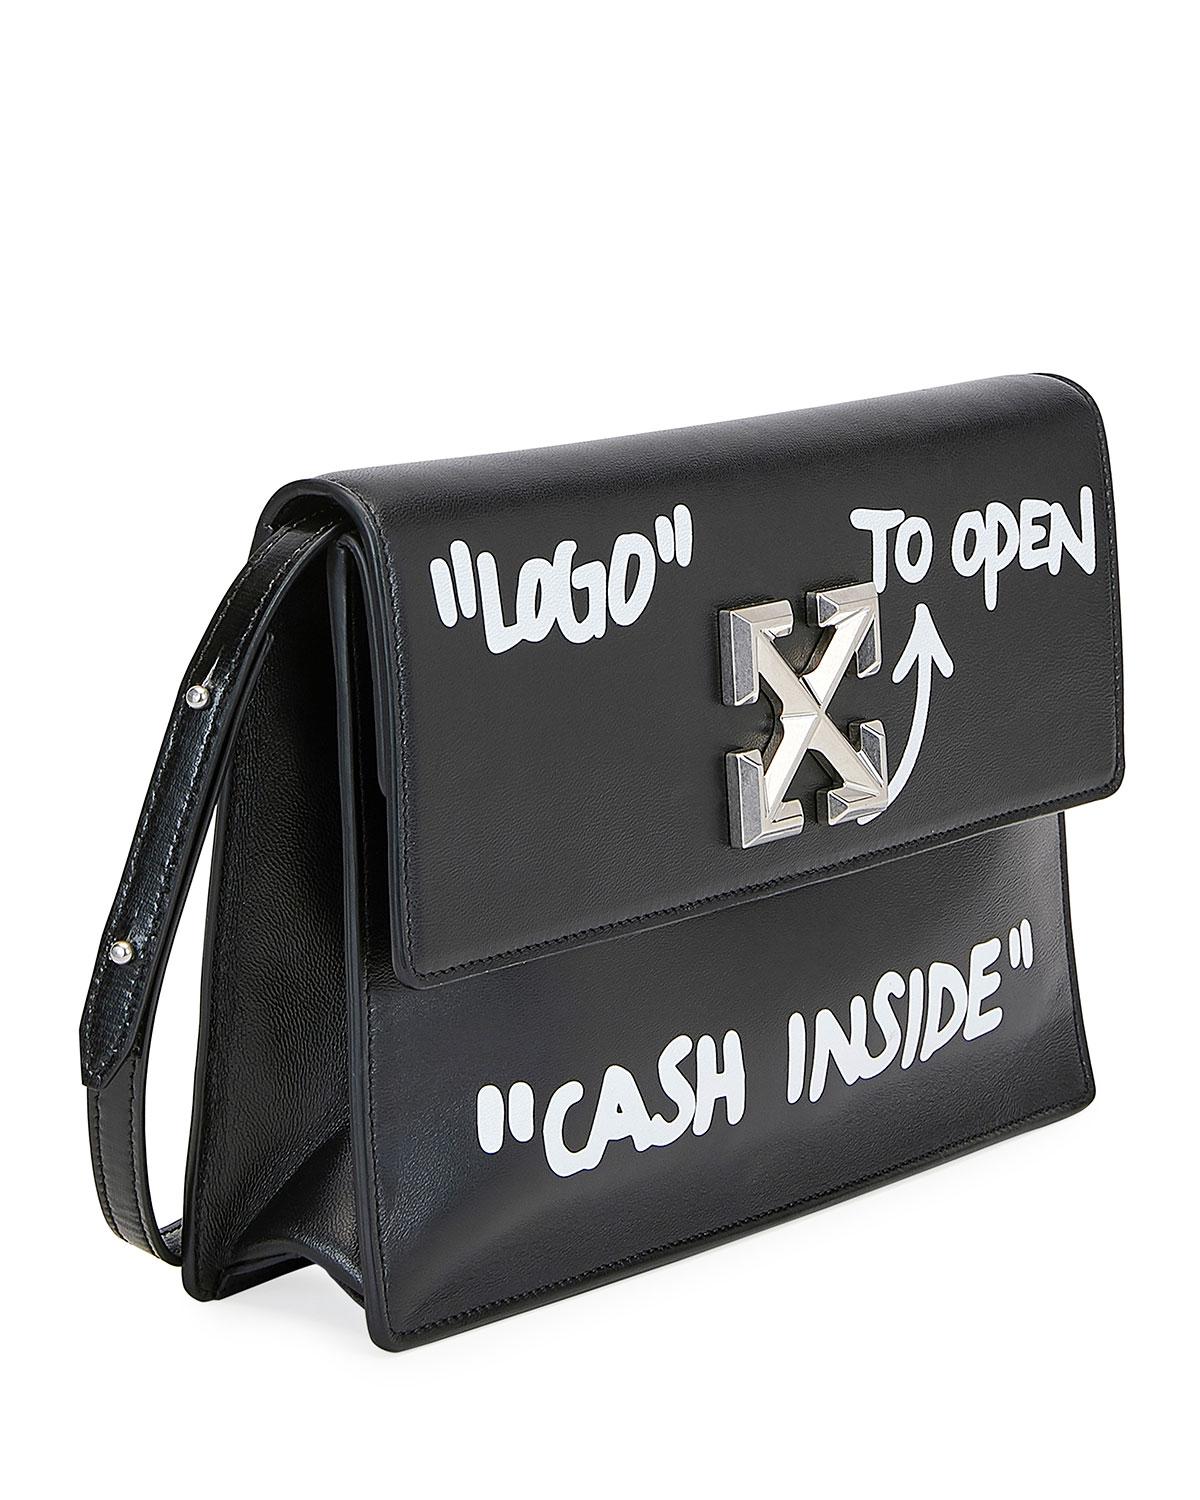 Off-White c/o Virgil Abloh Jitney Cash Inside Top Handle Bag in Black - Lyst